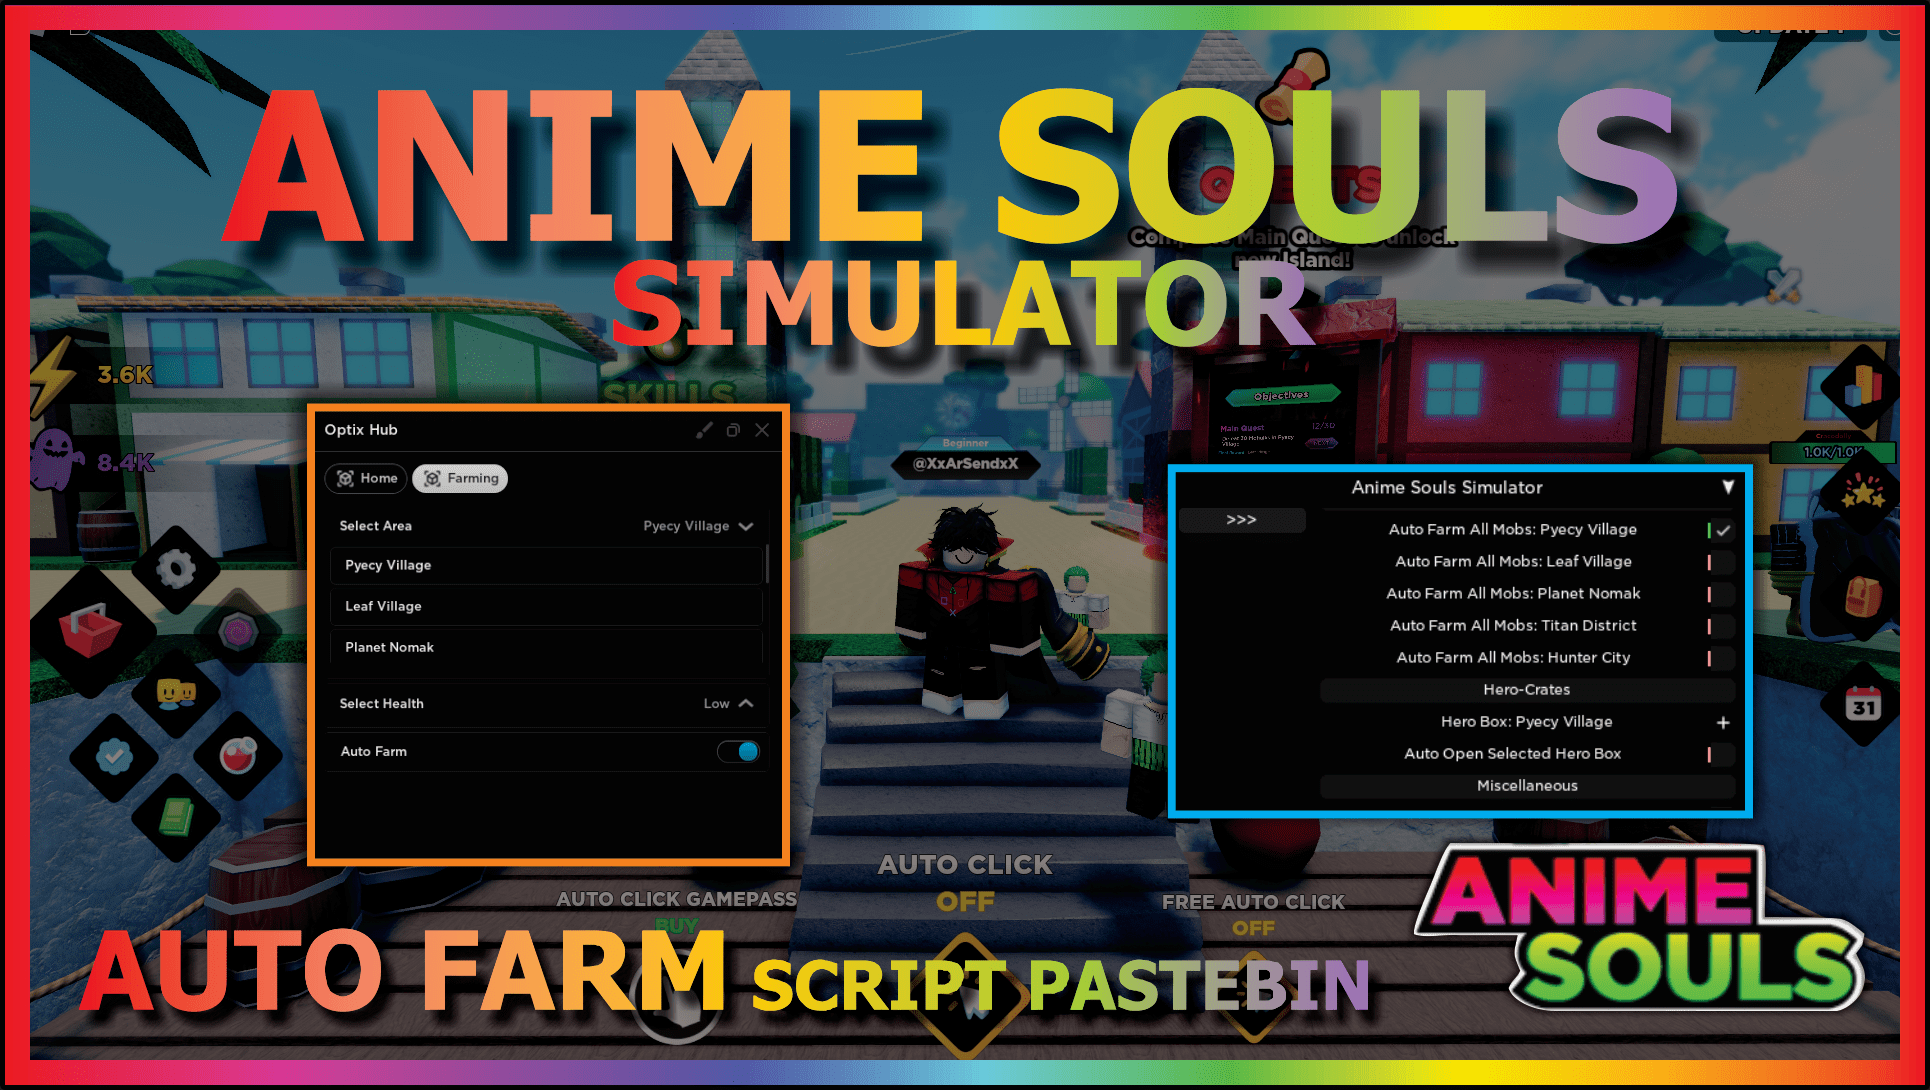 Anime Souls Simulator Codes for 23 January 2023 - News